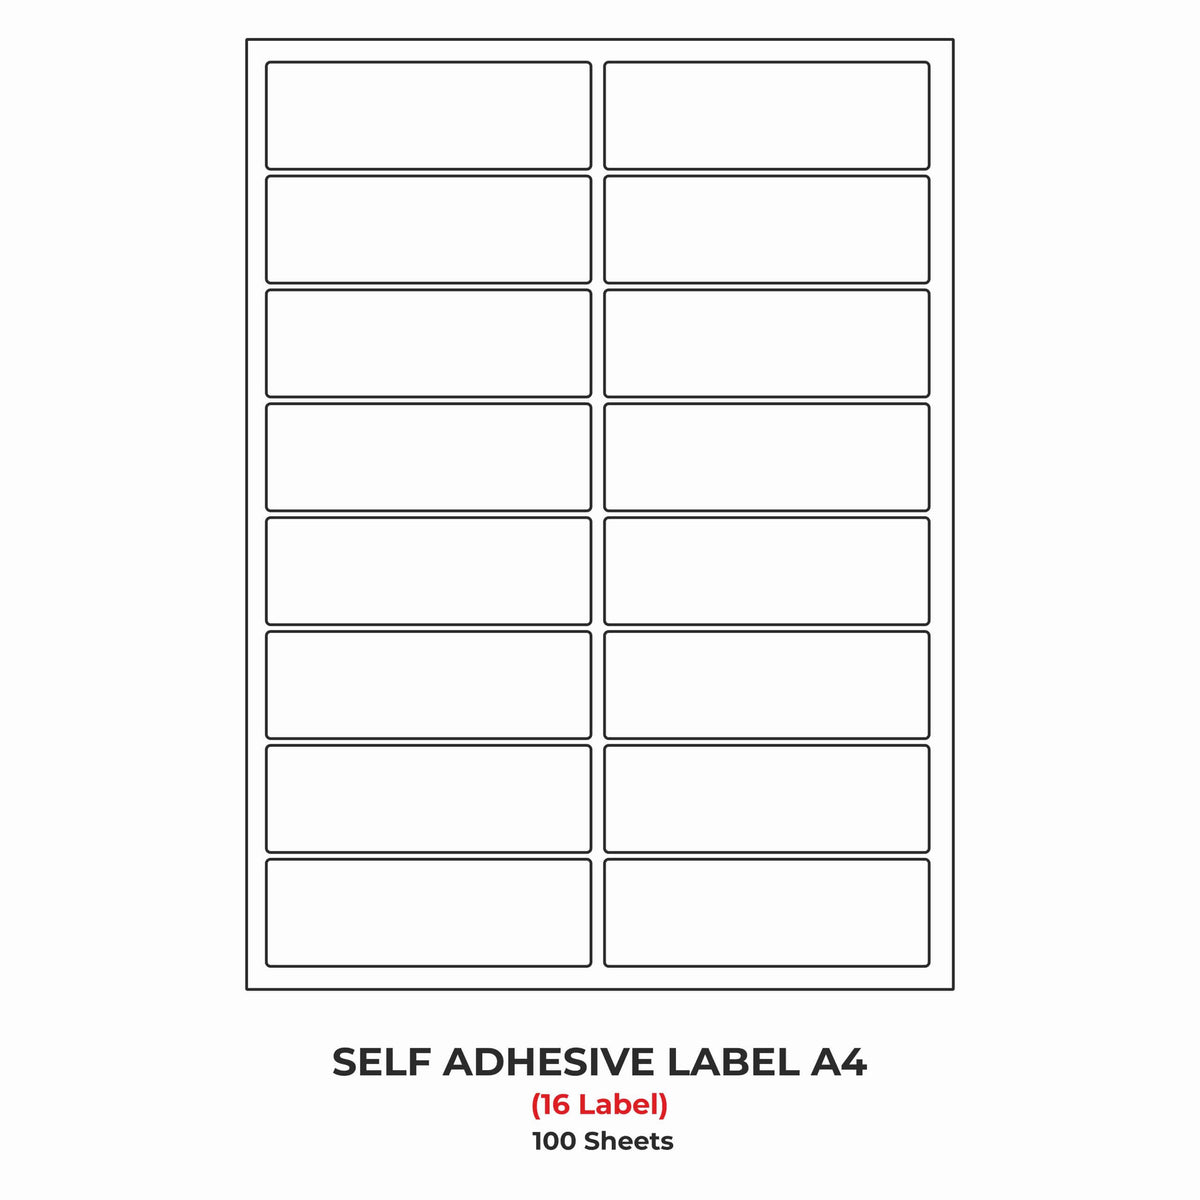 A4 (ST16) Address Label (100mm x 33mm x 16) (Self Adhesive Label for Inkjet/Copier/Laser Printer)